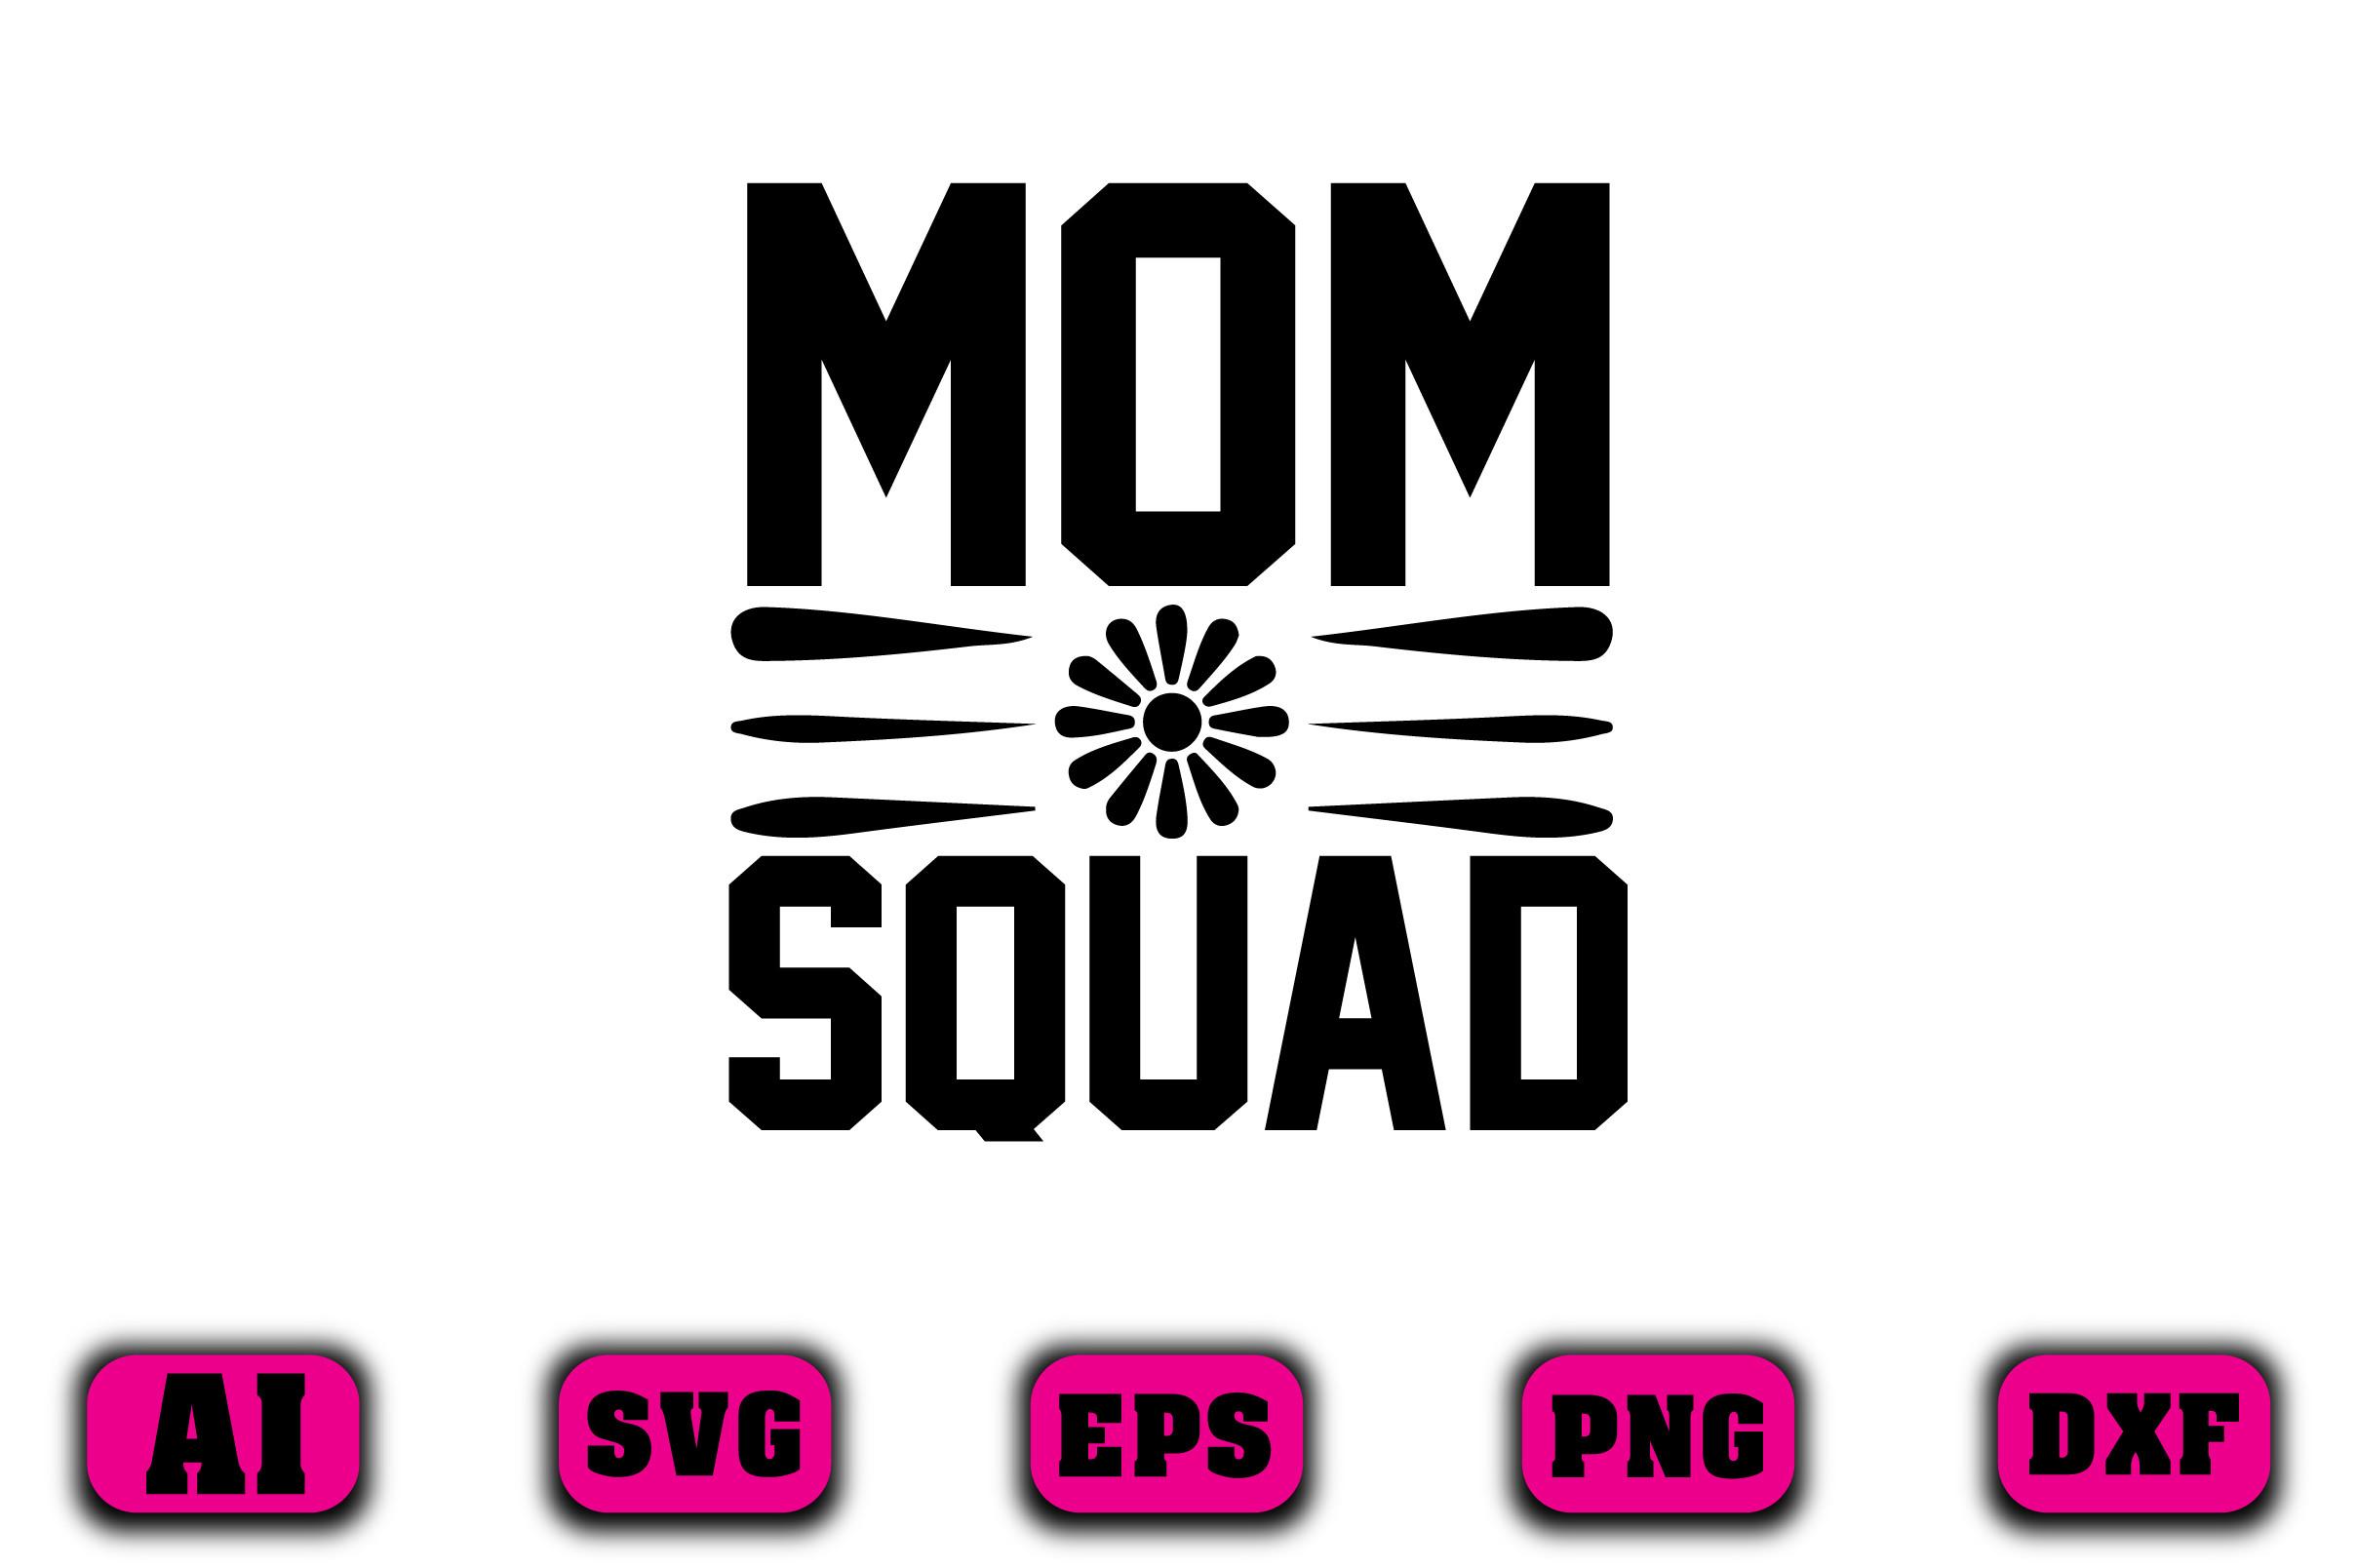 Mom Squad